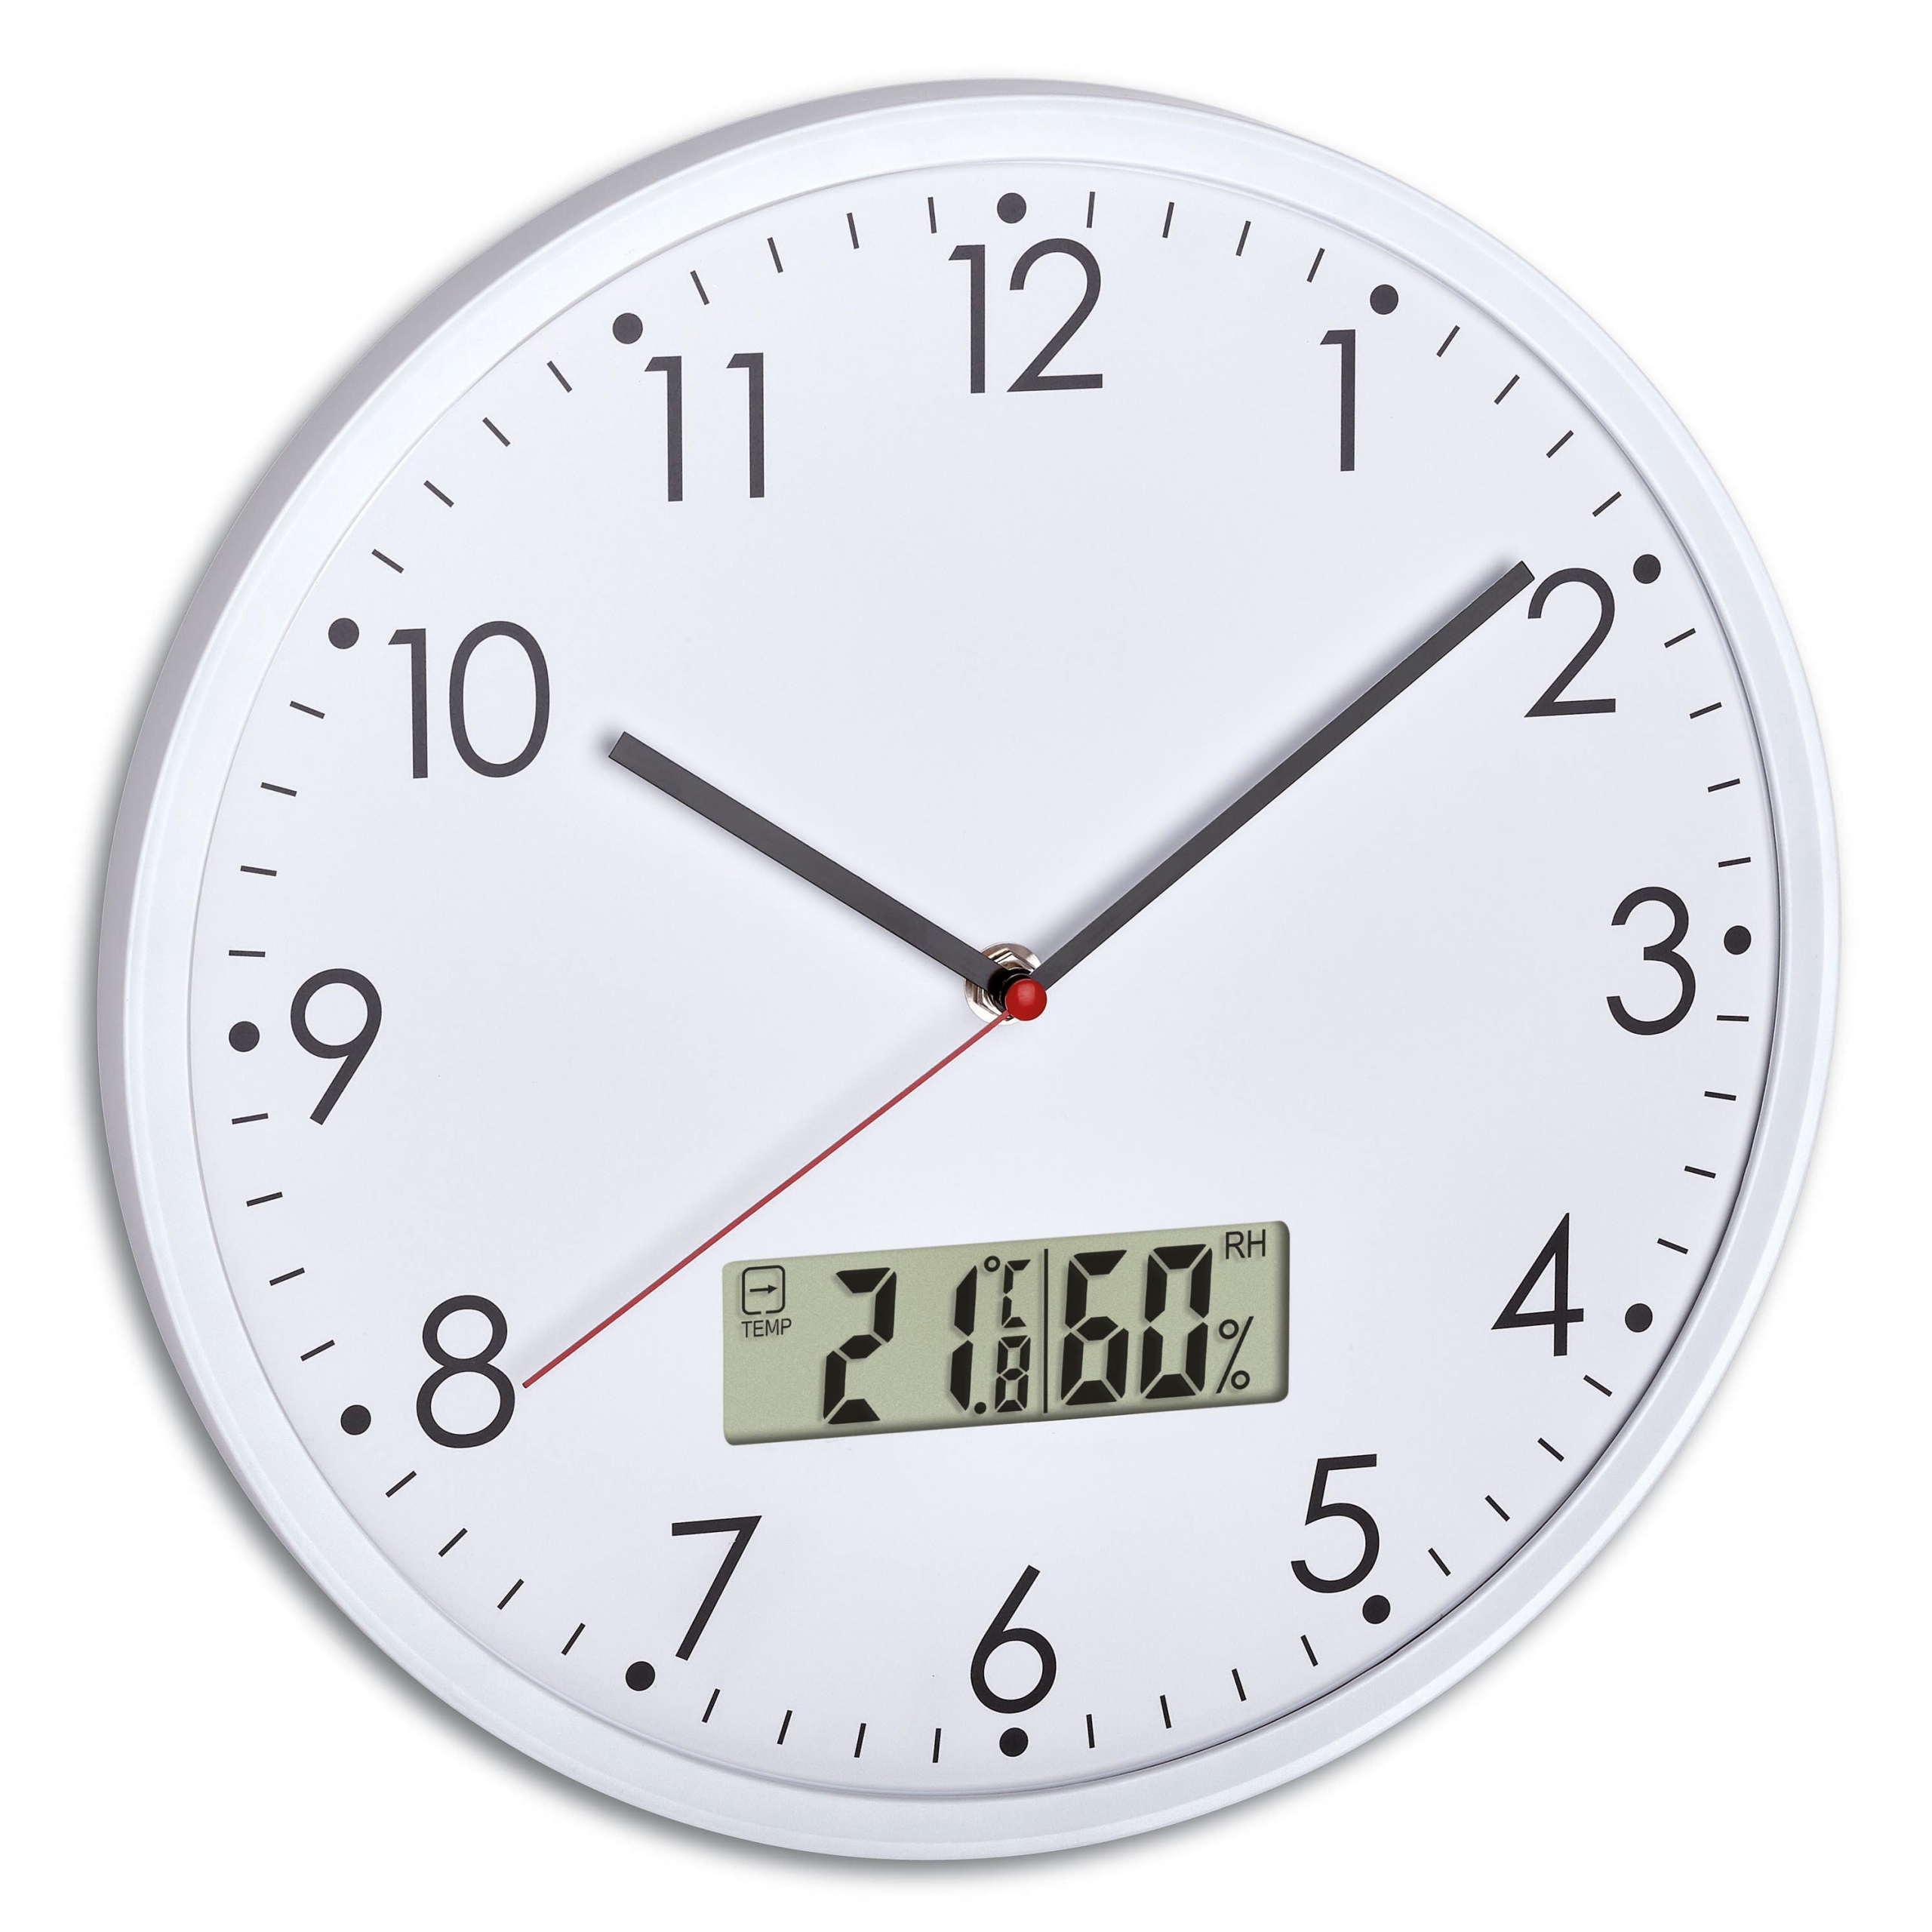 Thermometer Clock Hygrometer